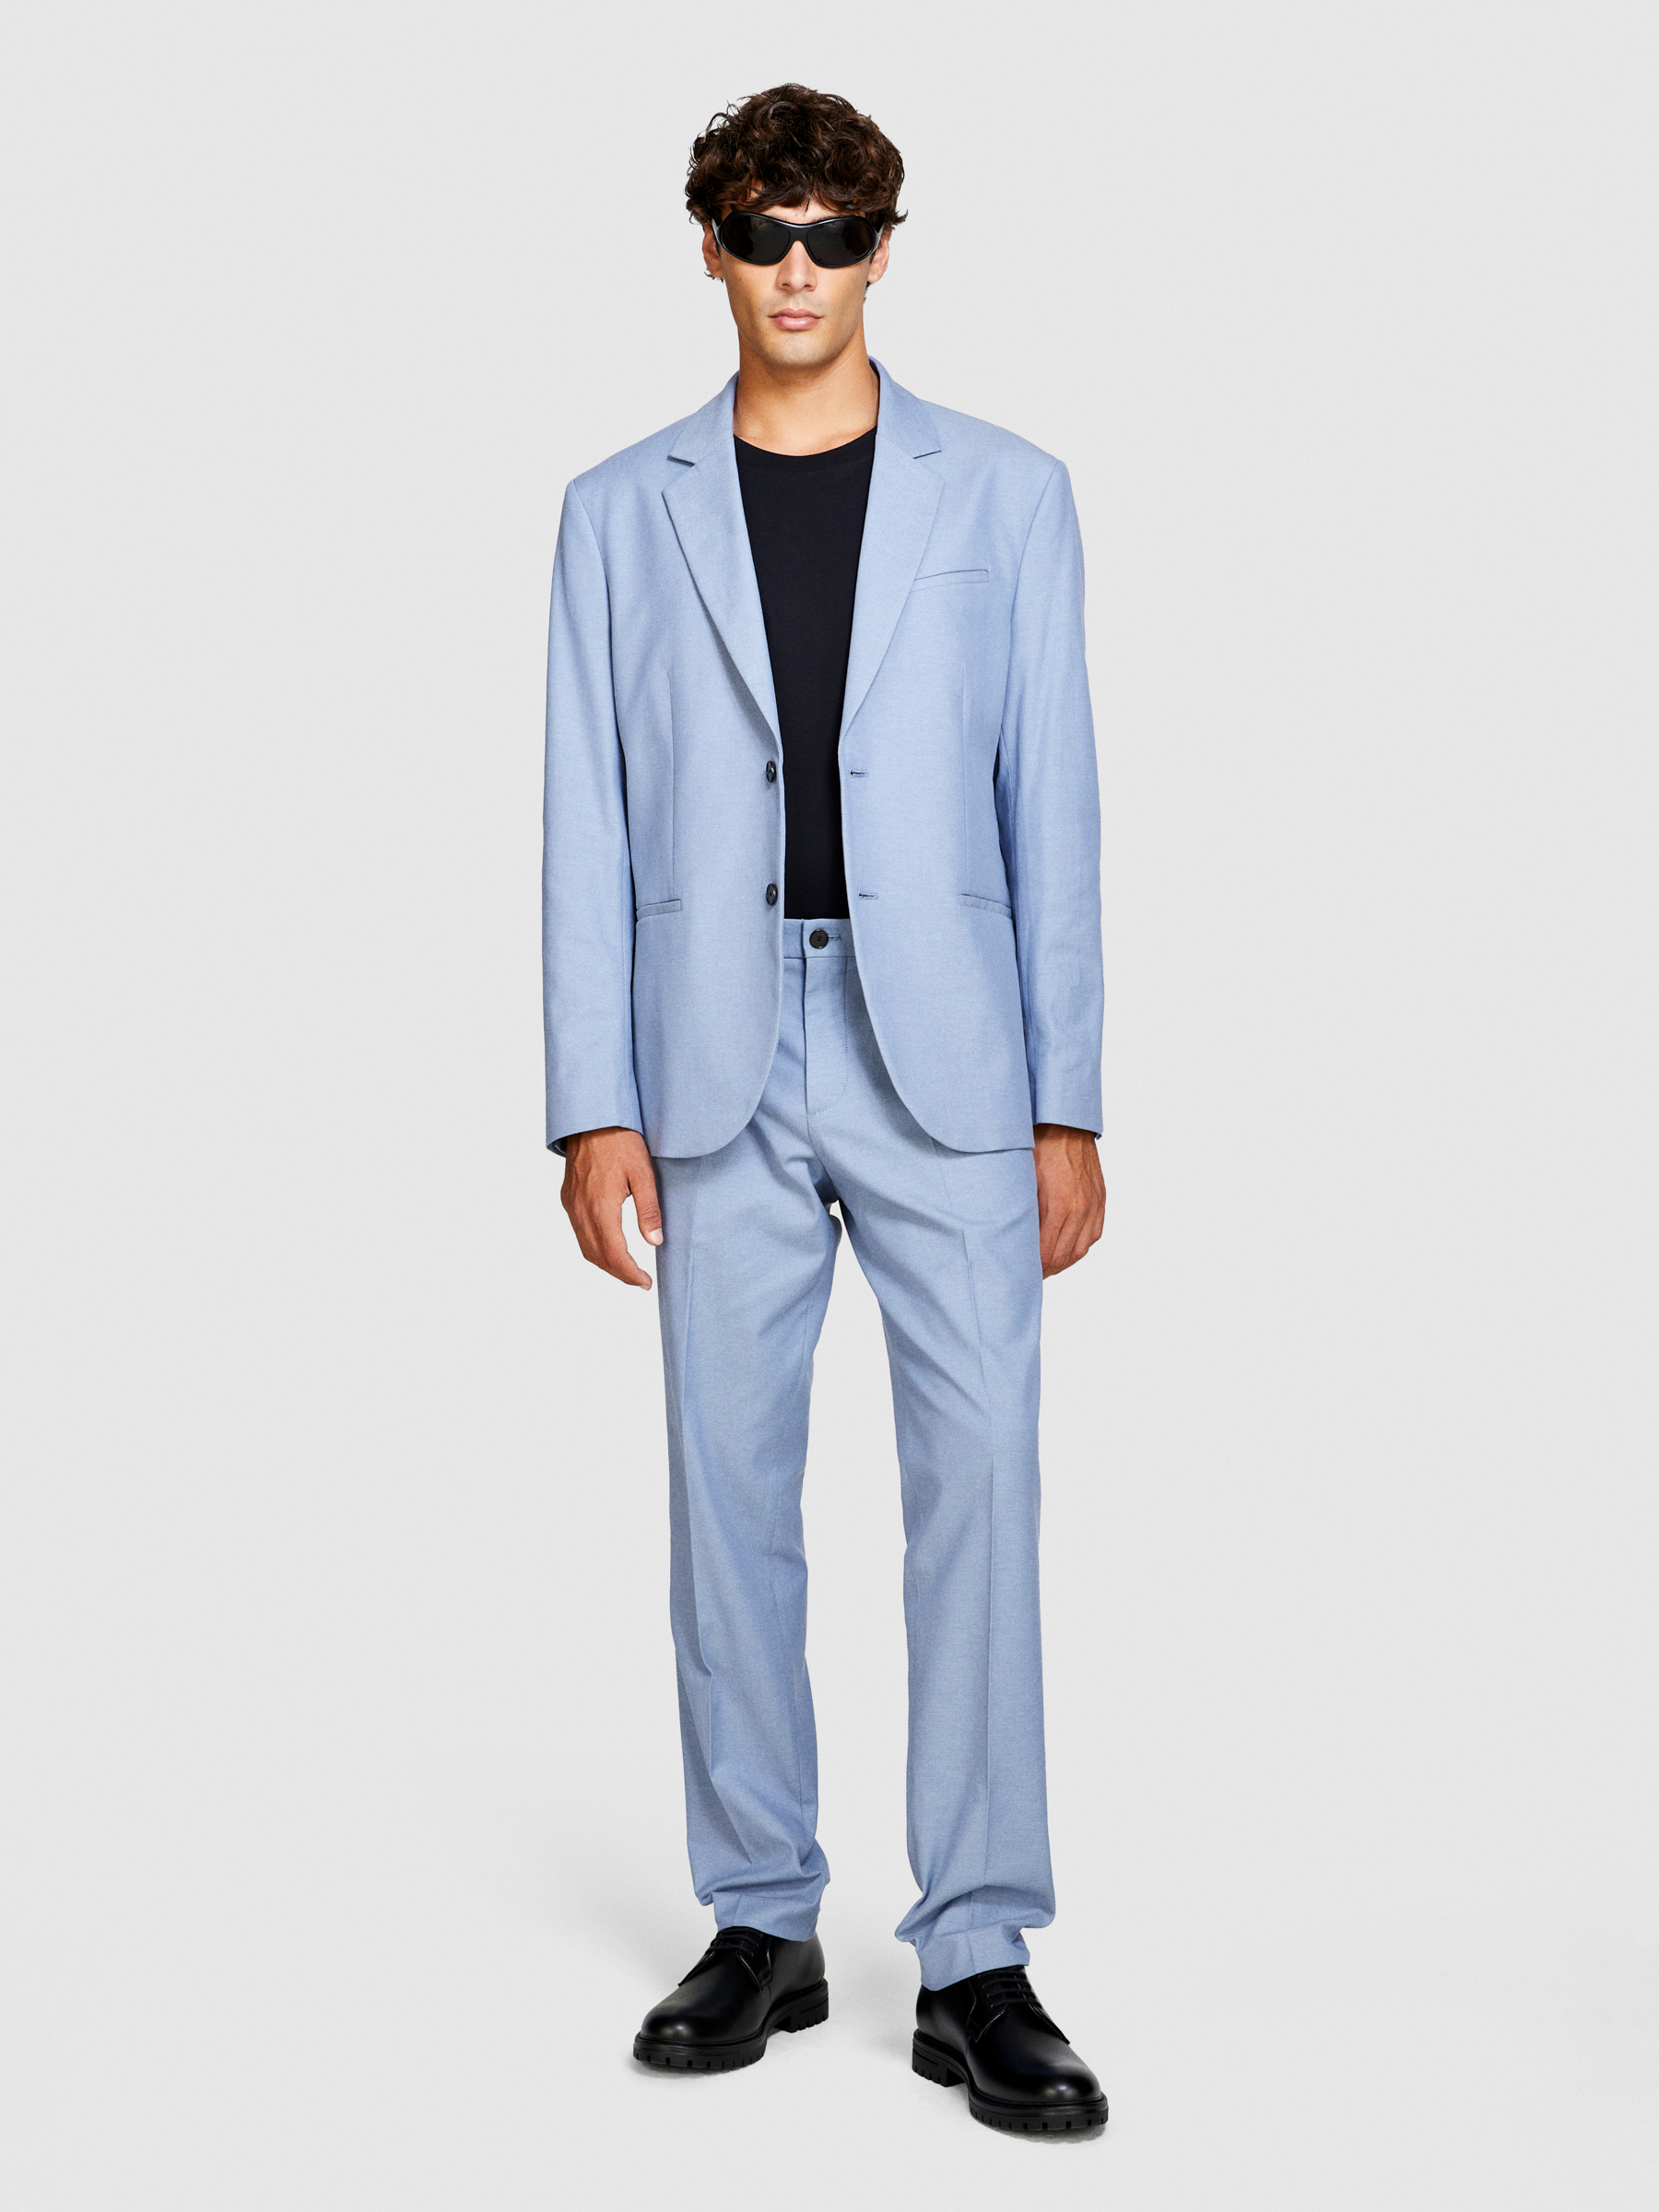 Sisley - Yarn Dyed Blazer, Man, Light Blue, Size: 52